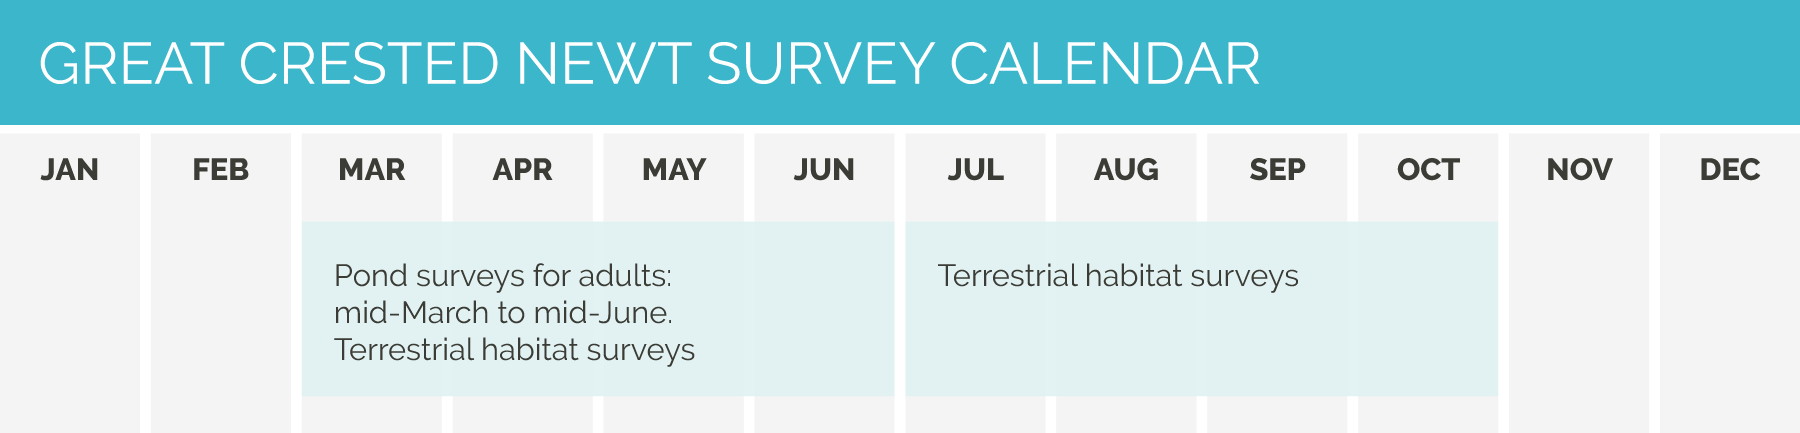 CSA calendar Great Crested Newt survey